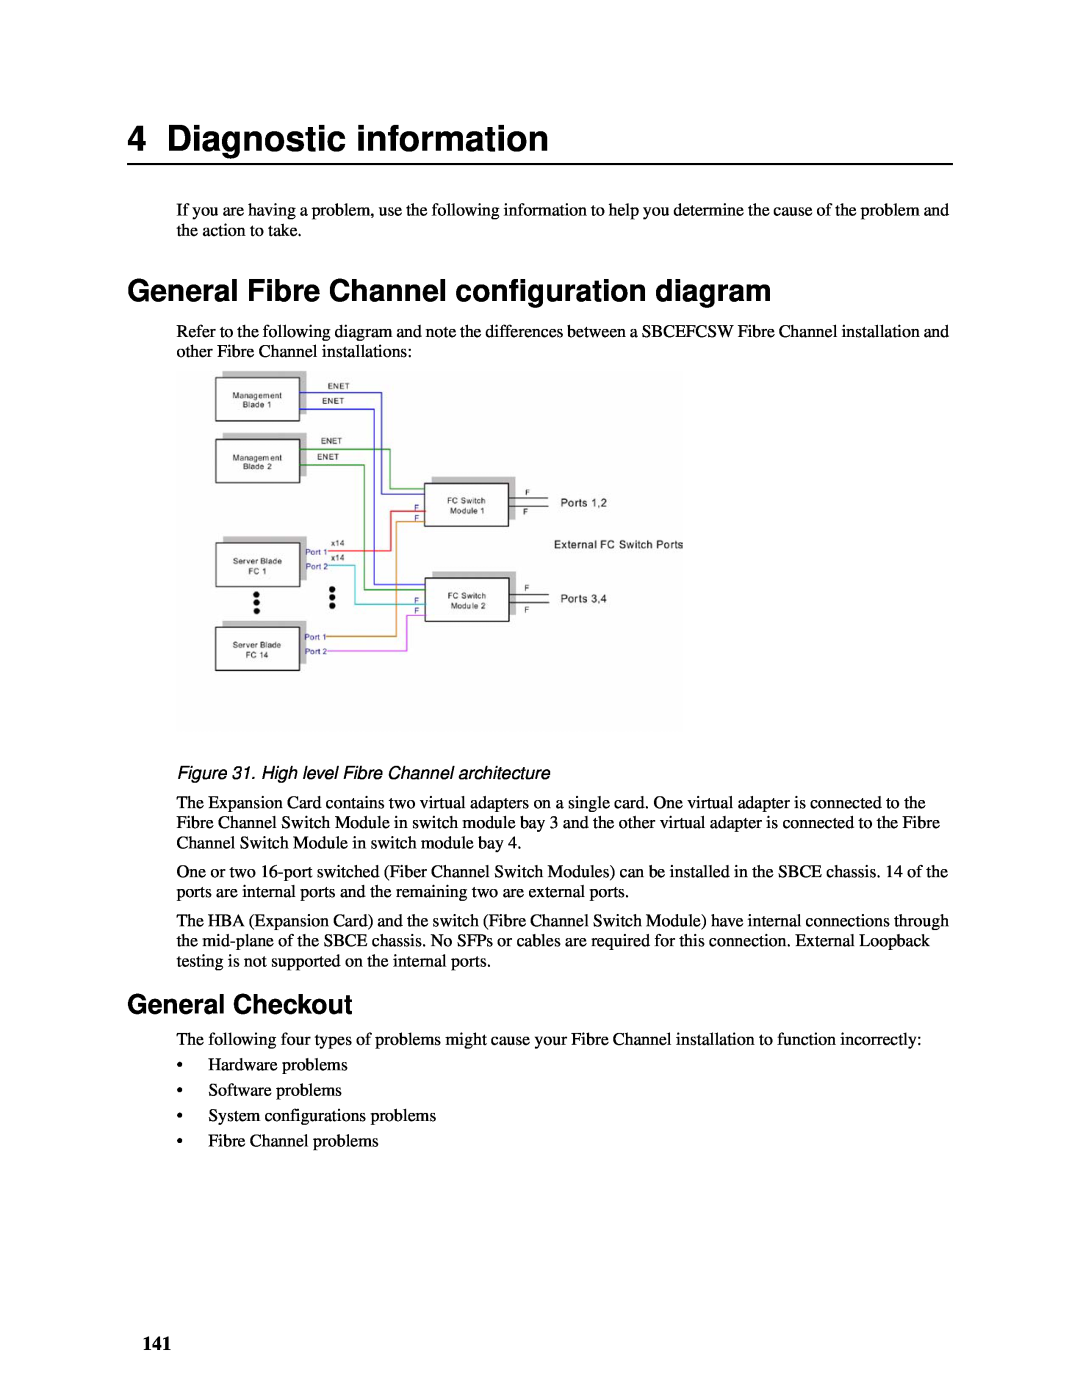 Intel SBCEFCSW, SBFCM manual Diagnostic information, General Fibre Channel configuration diagram, General Checkout 